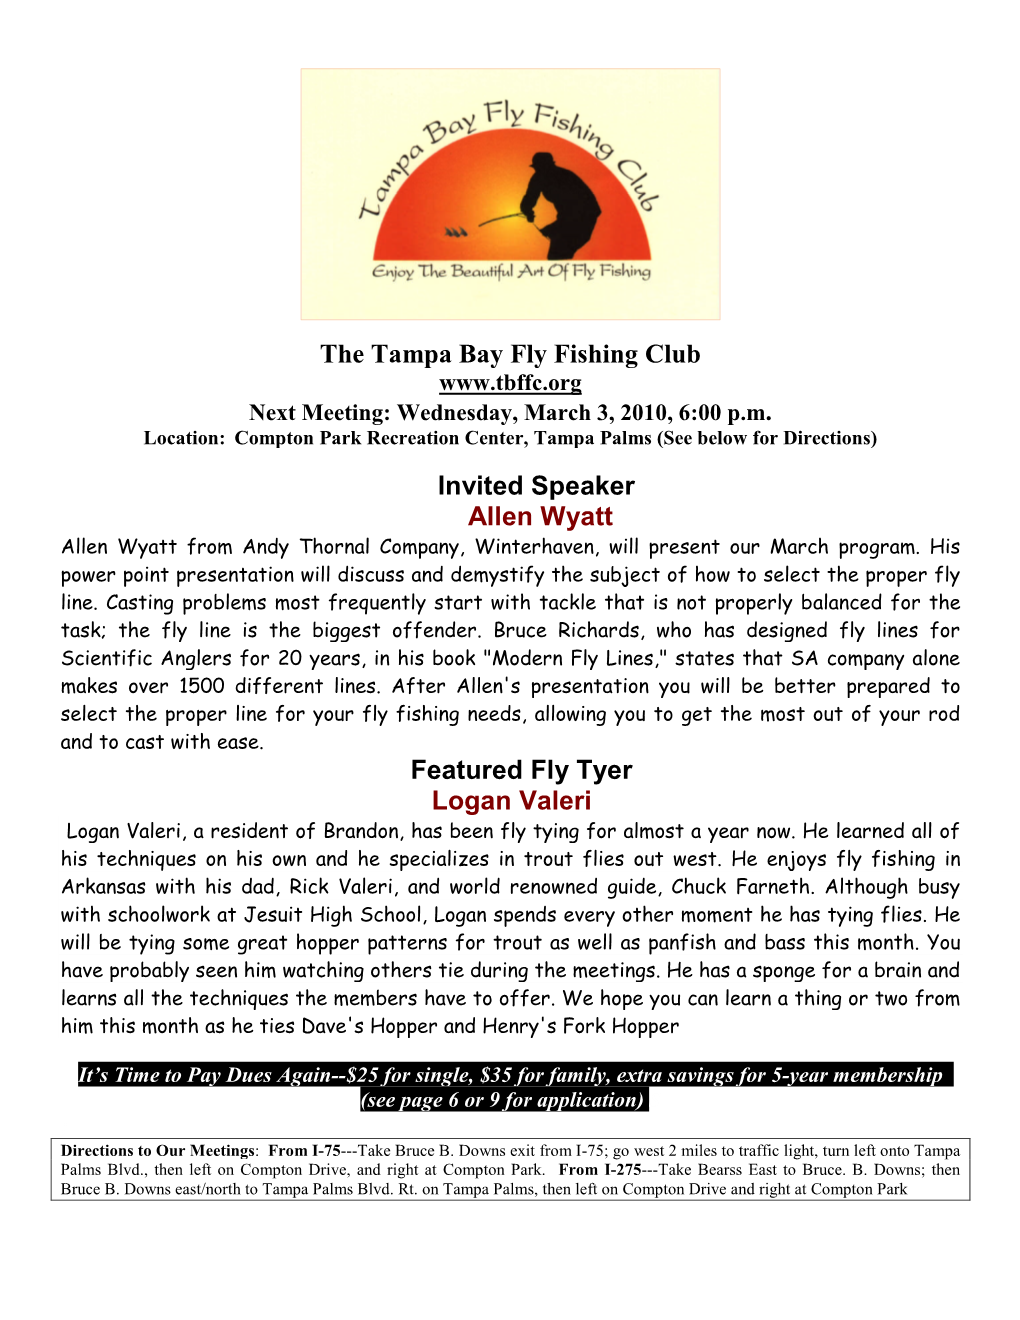 The Tampa Bay Fly Fishing Club Invited Speaker Allen Wyatt